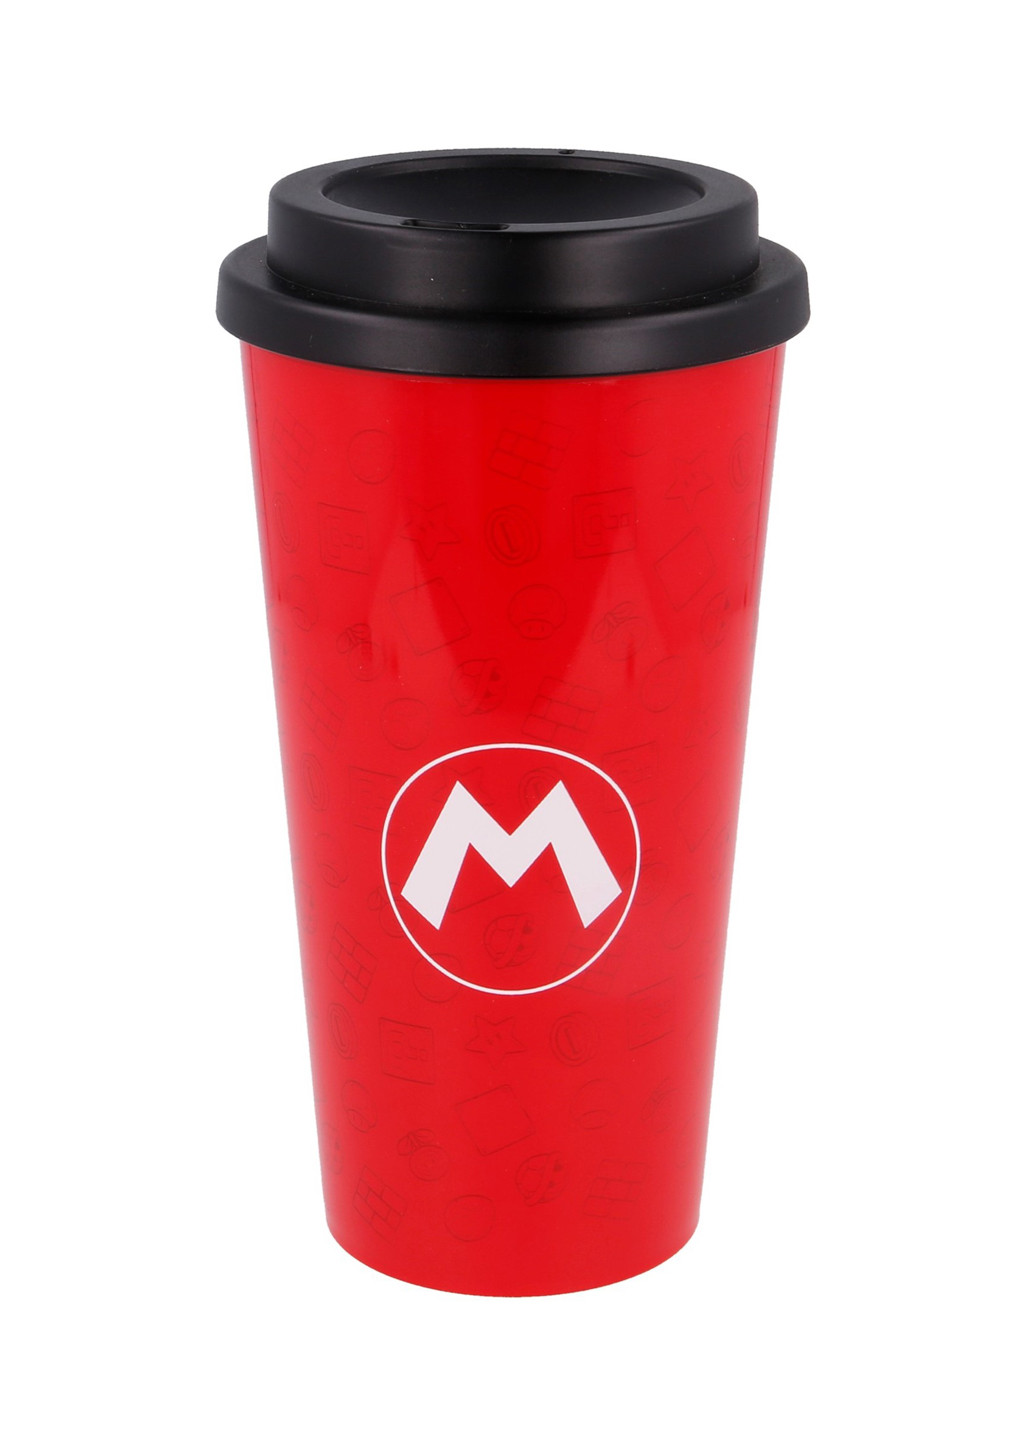 Термокружка Super Mario - Star, Double Walled Coffee Tumbler 520 мл Stor (252016526)